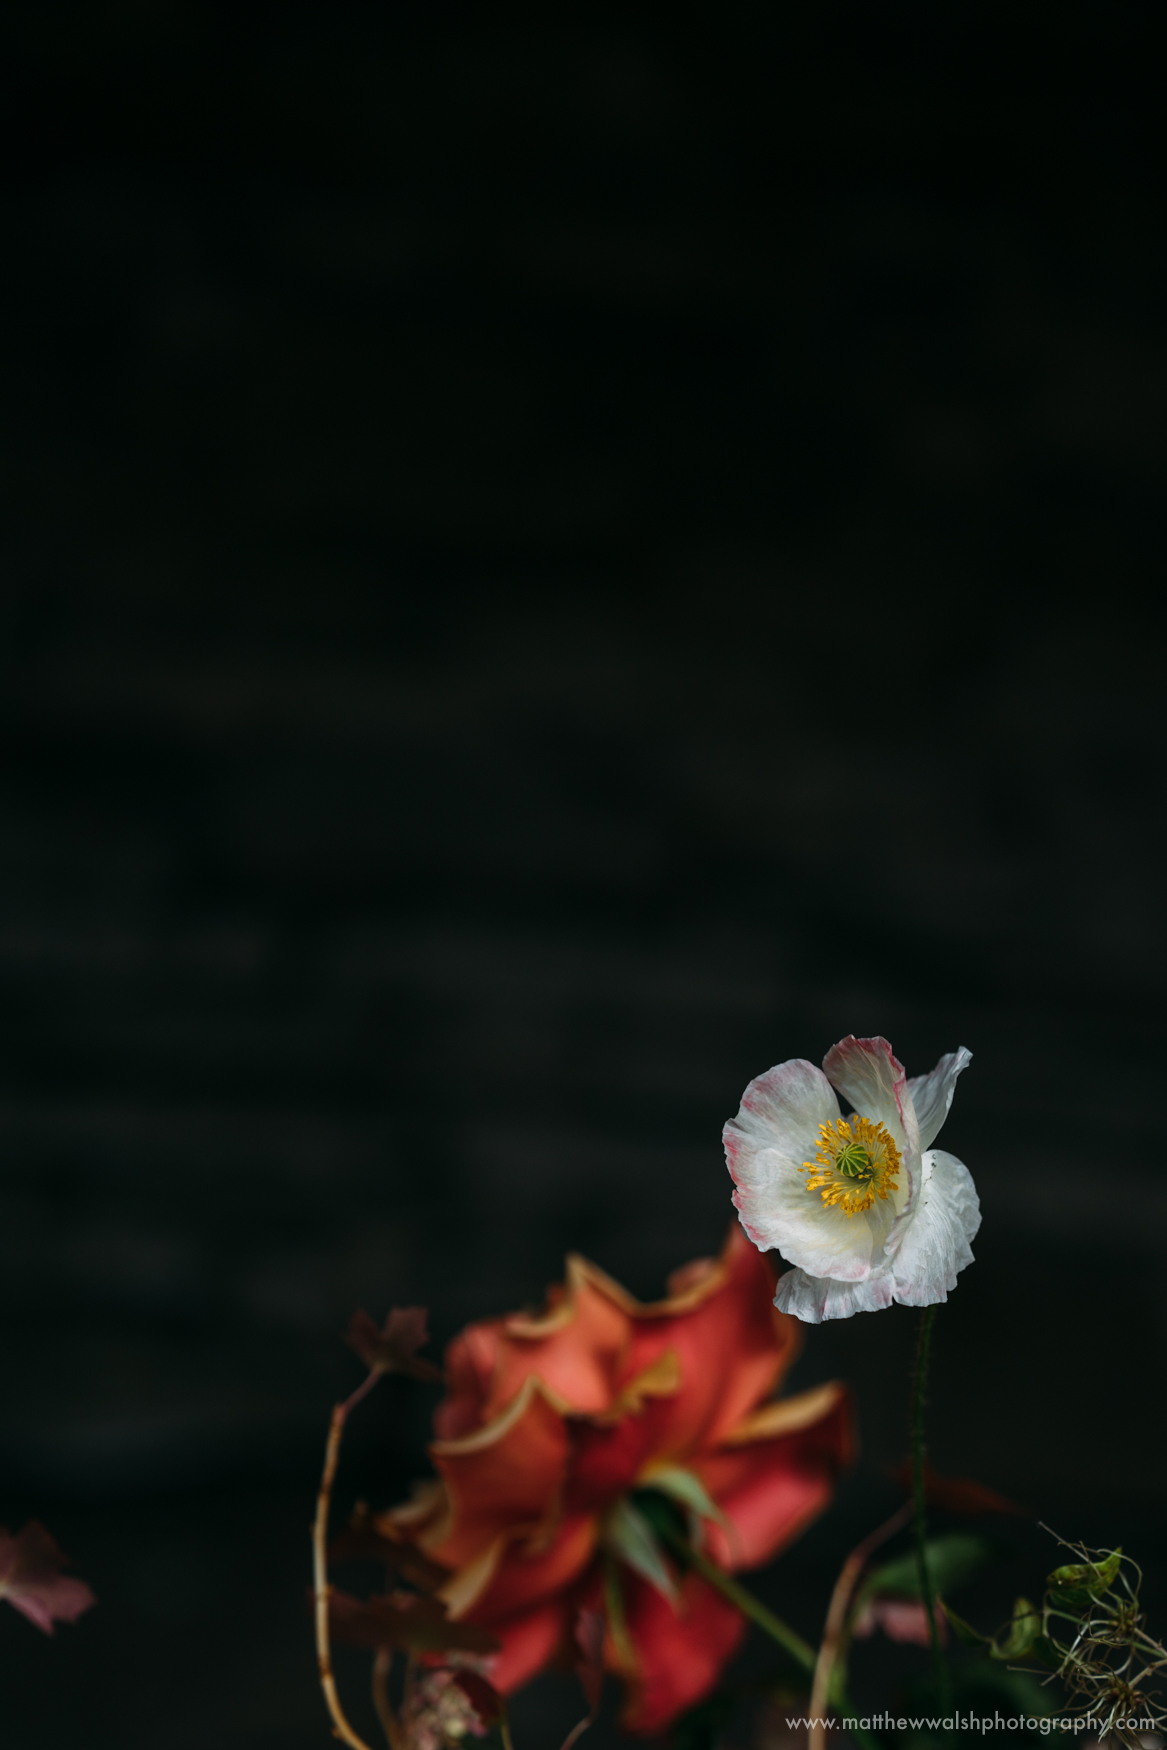 A delicate flower against a hard dark backdrop